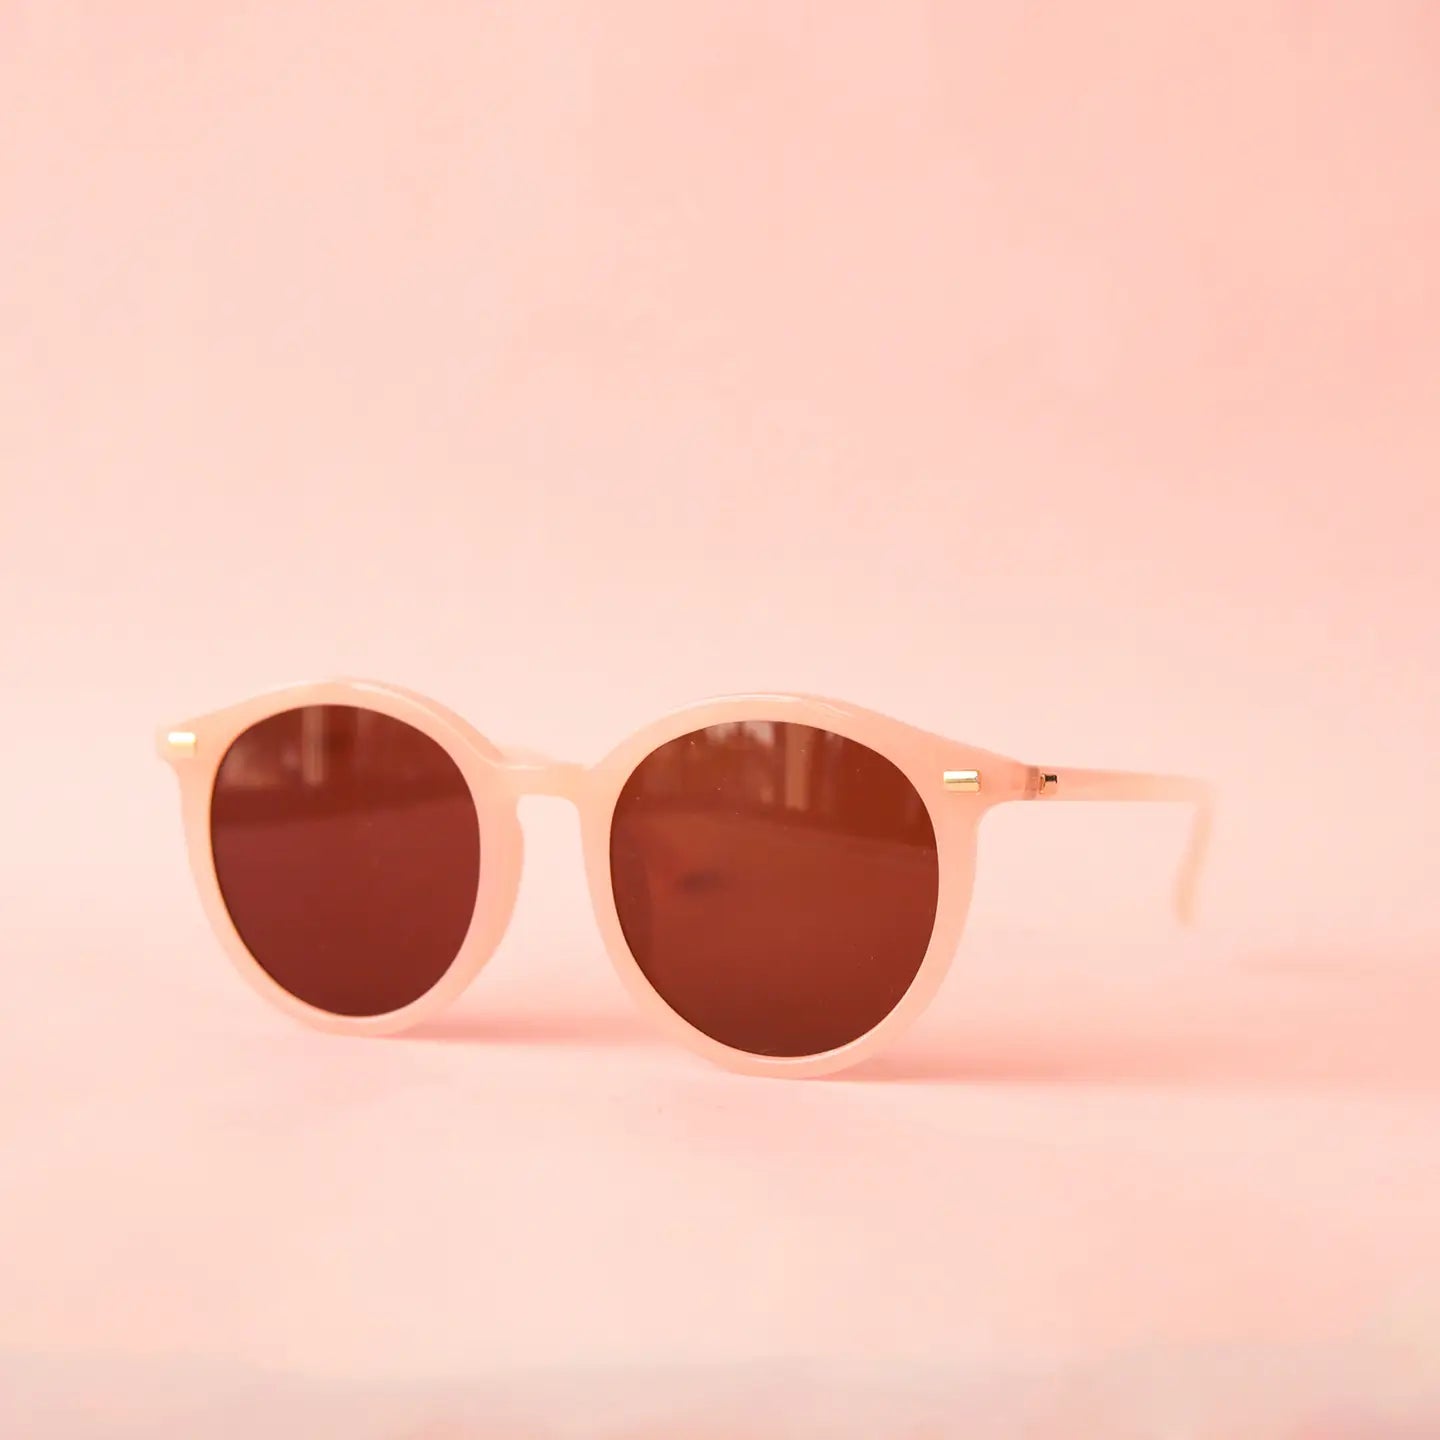 sam sunglasses in pink